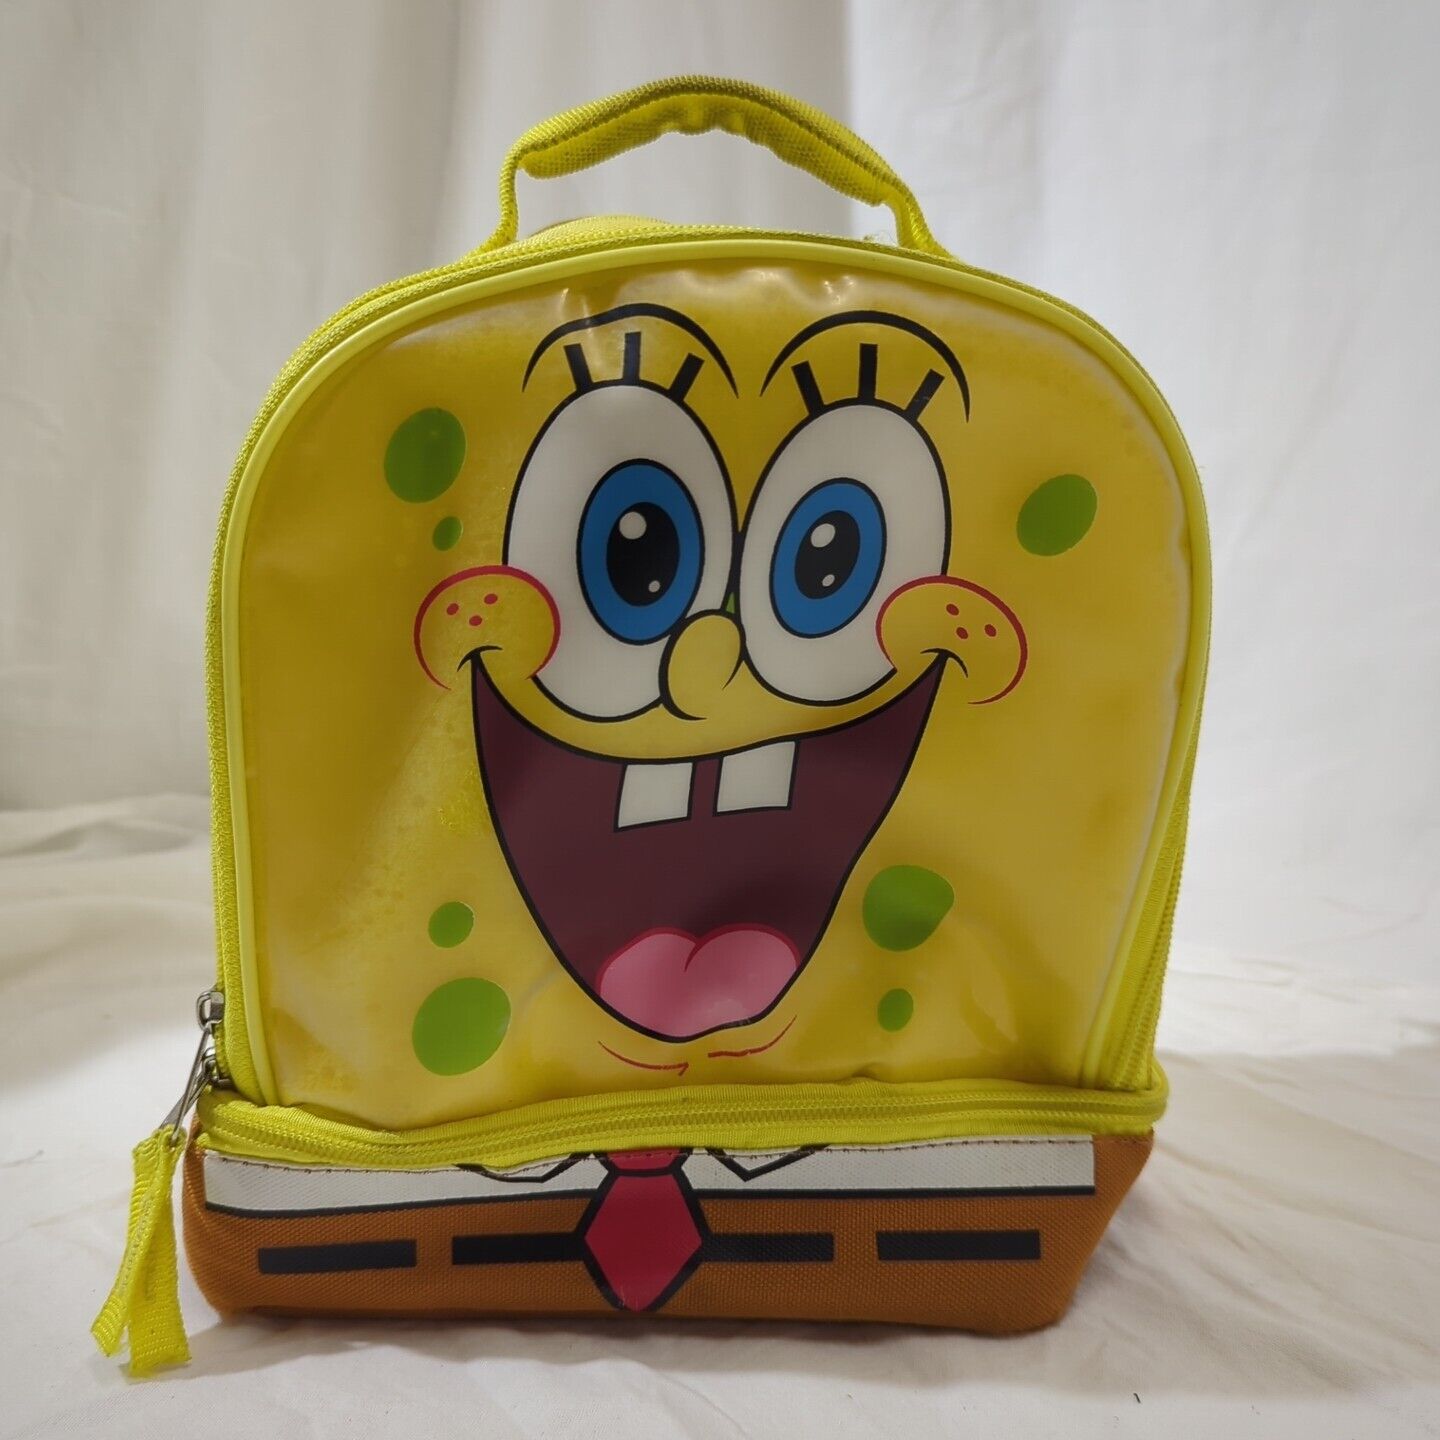 Spongebob Squarepants School Lunch Box Yellow Bag Vintage Nickelodeon Soft Used